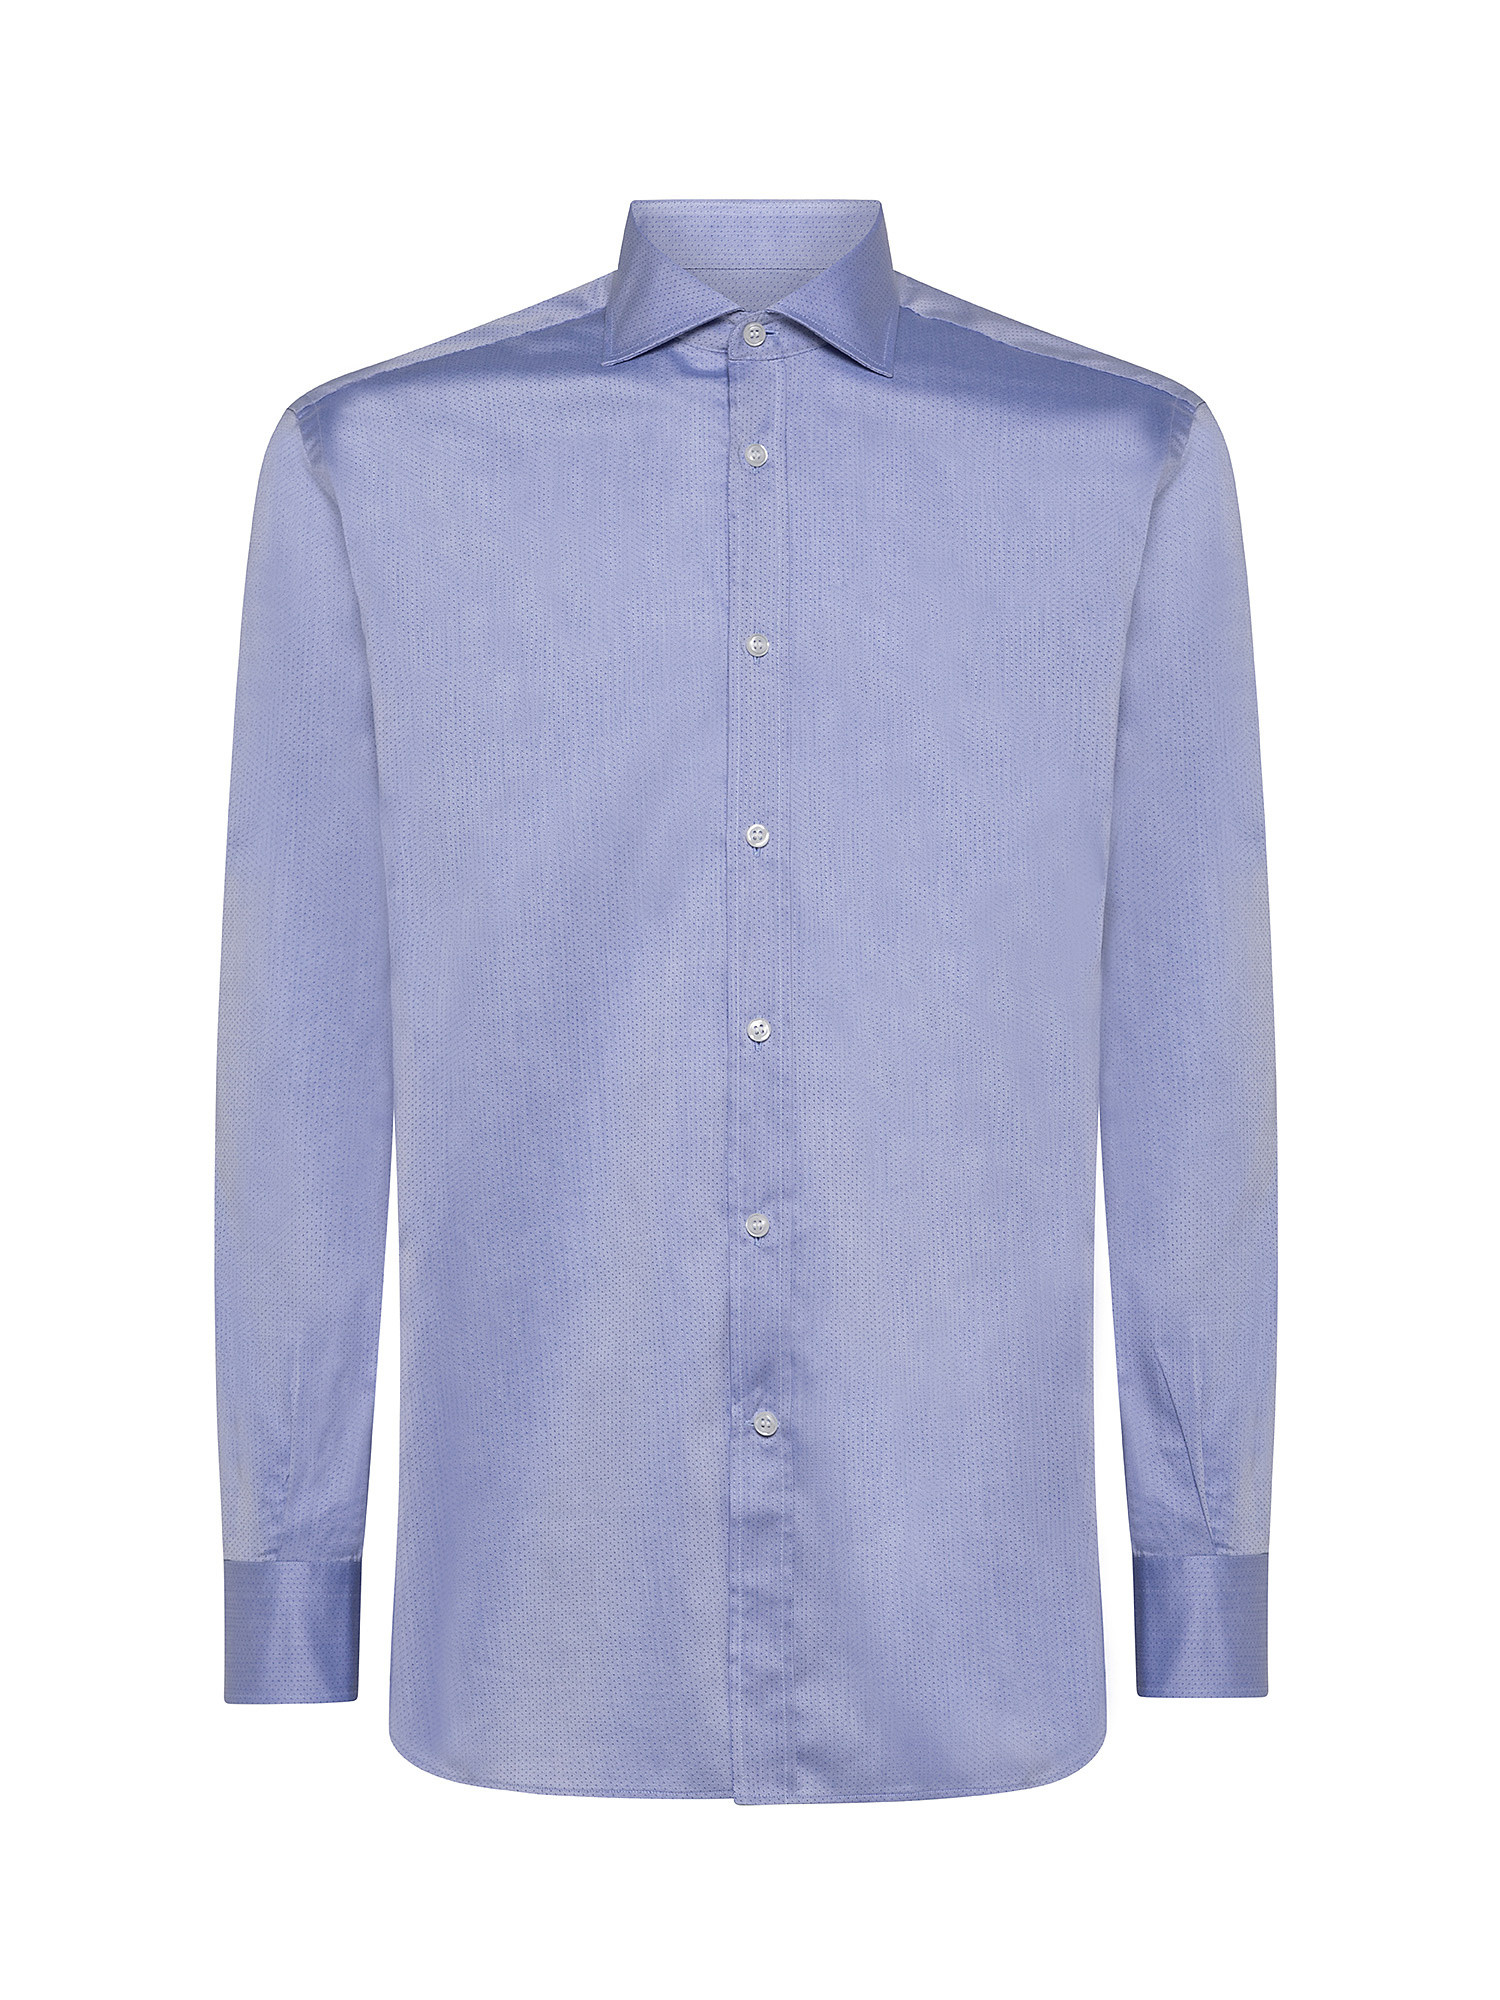 Camicia regular fit twill di cotone, Azzurro, large image number 0